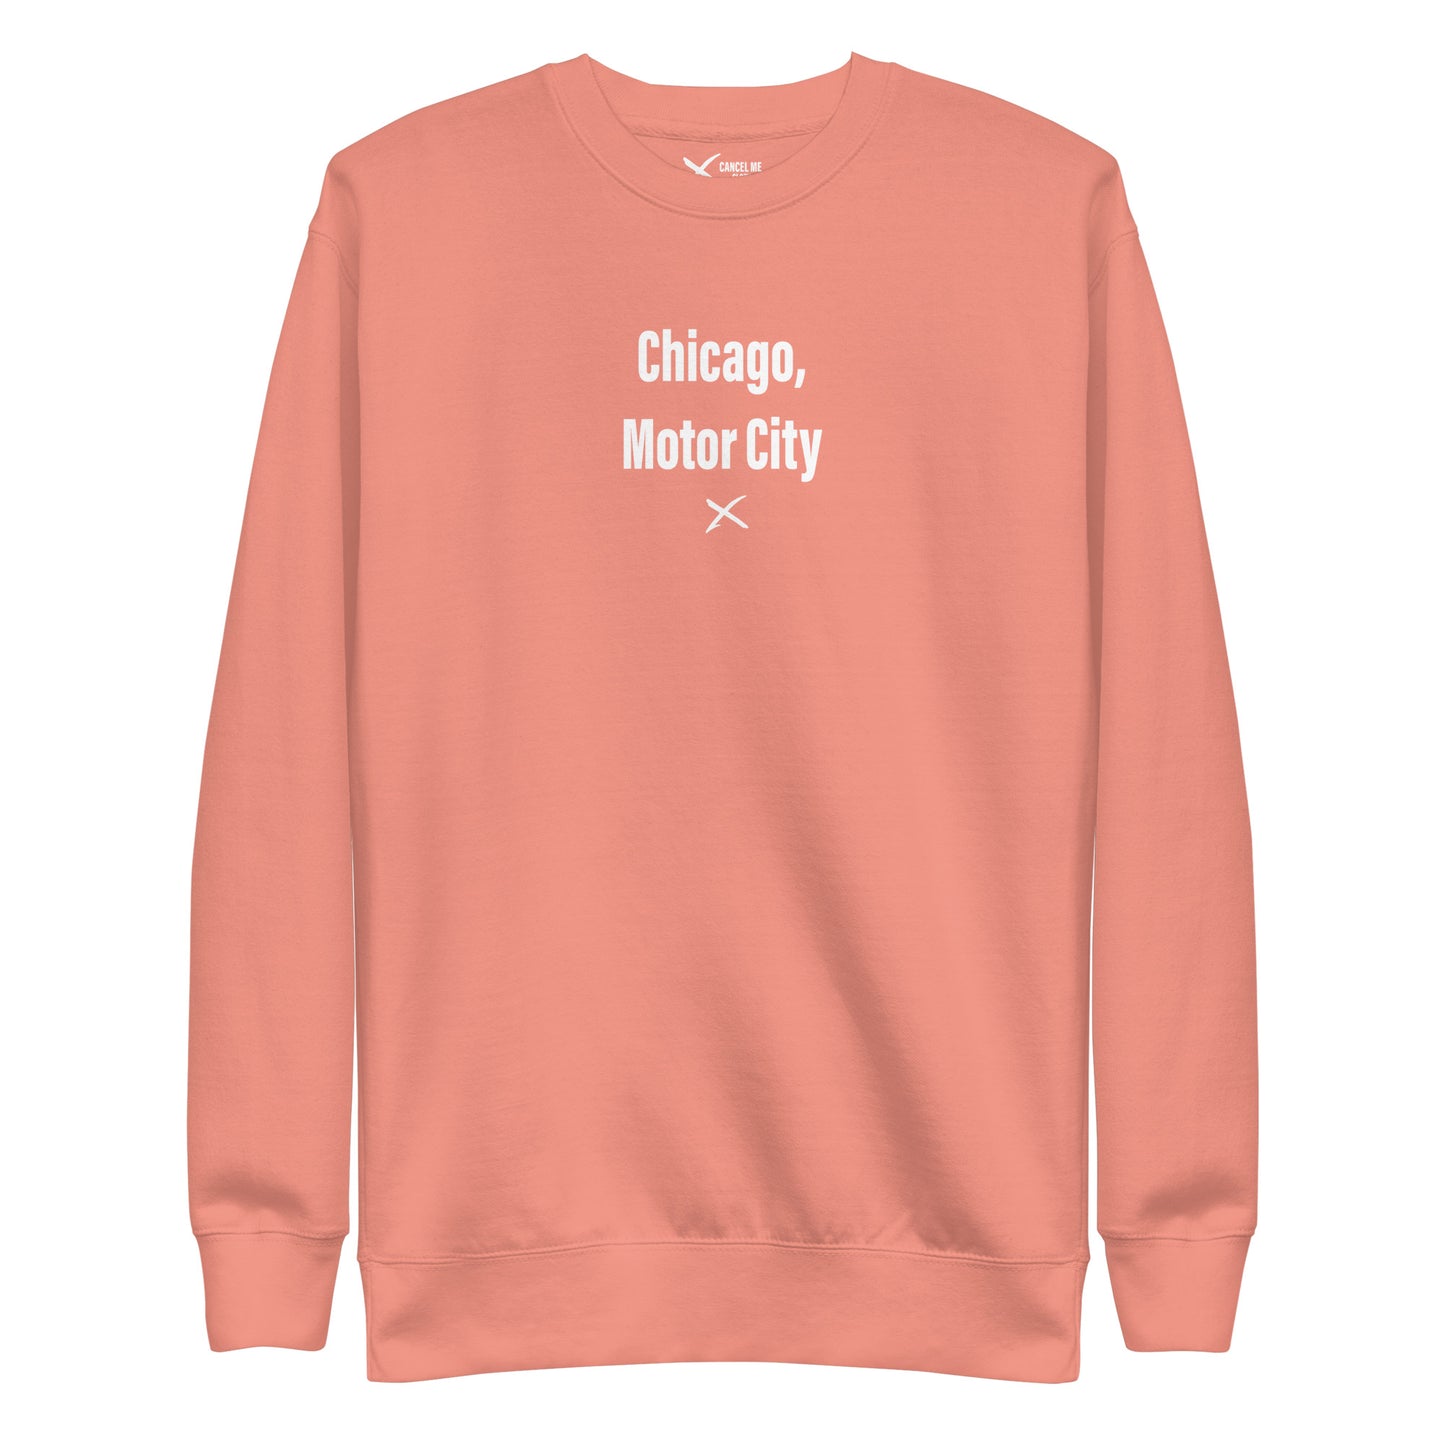 Chicago, Motor City - Sweatshirt